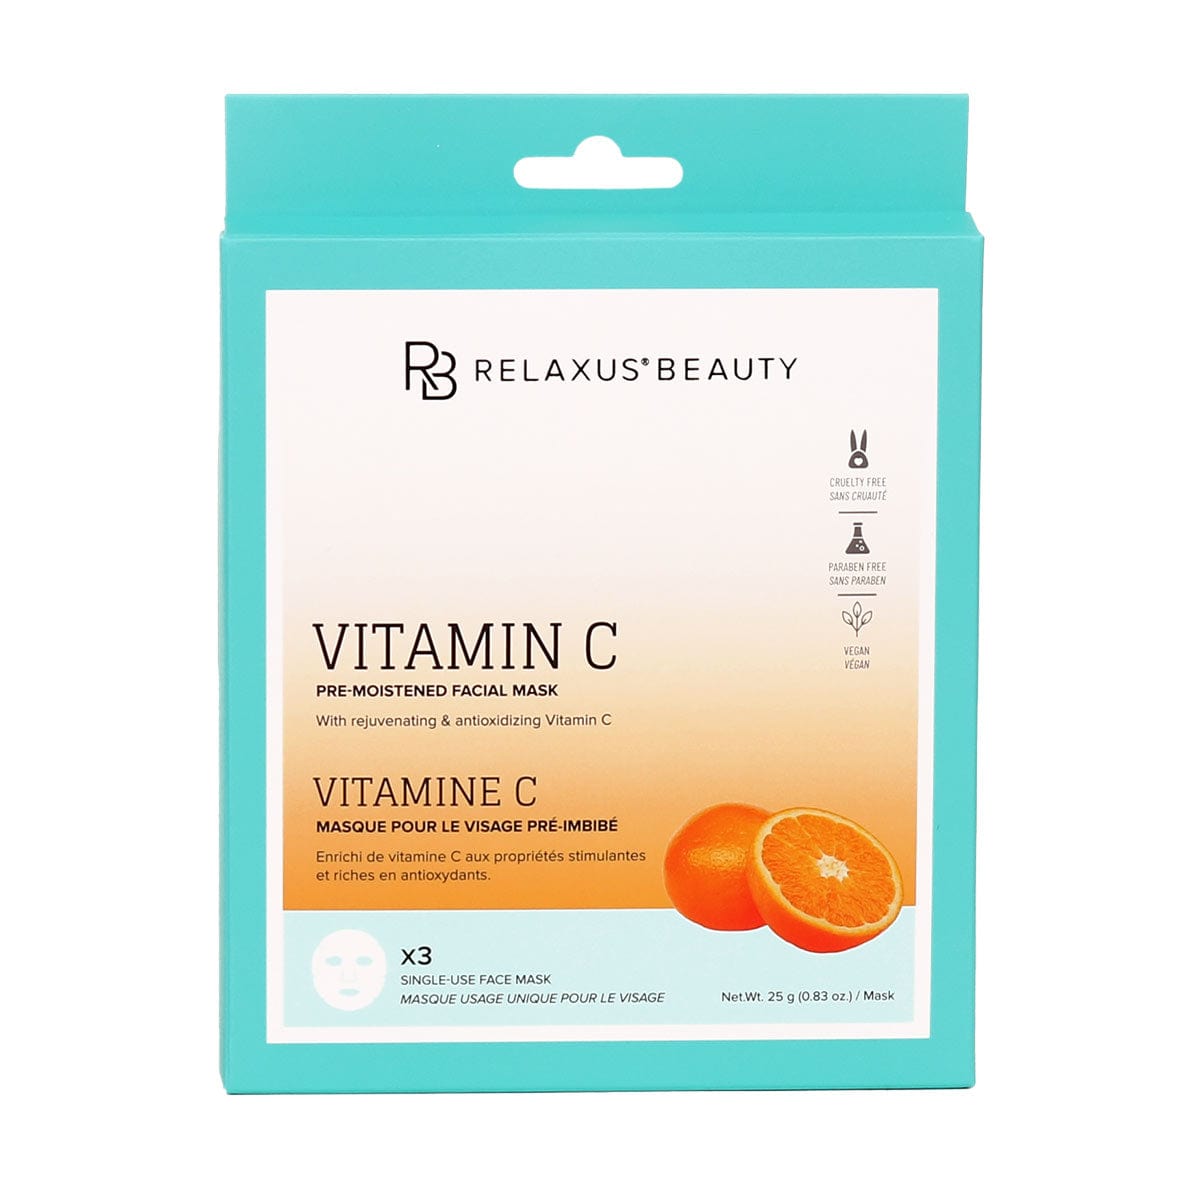 Wholesale Vitamin C Face Masks - Displayer of 12